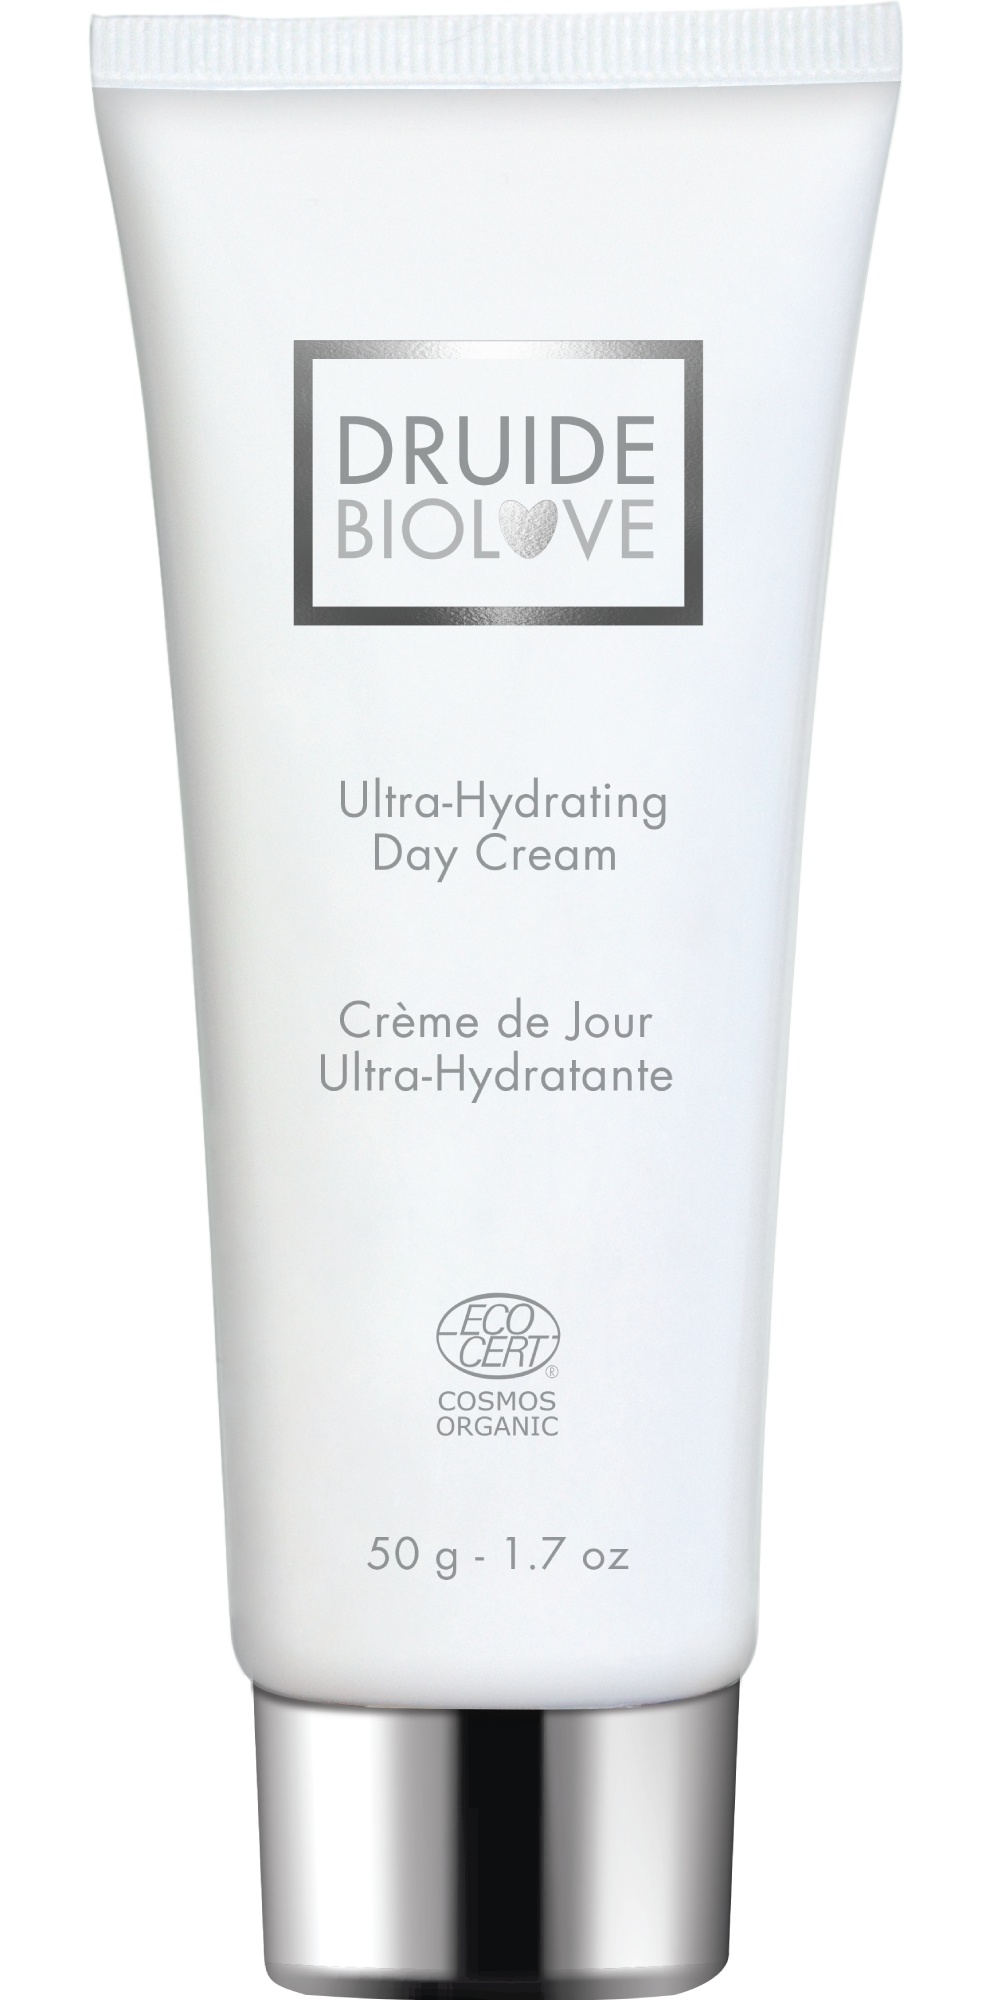 Druide Ultra-Hydrating Day Cream